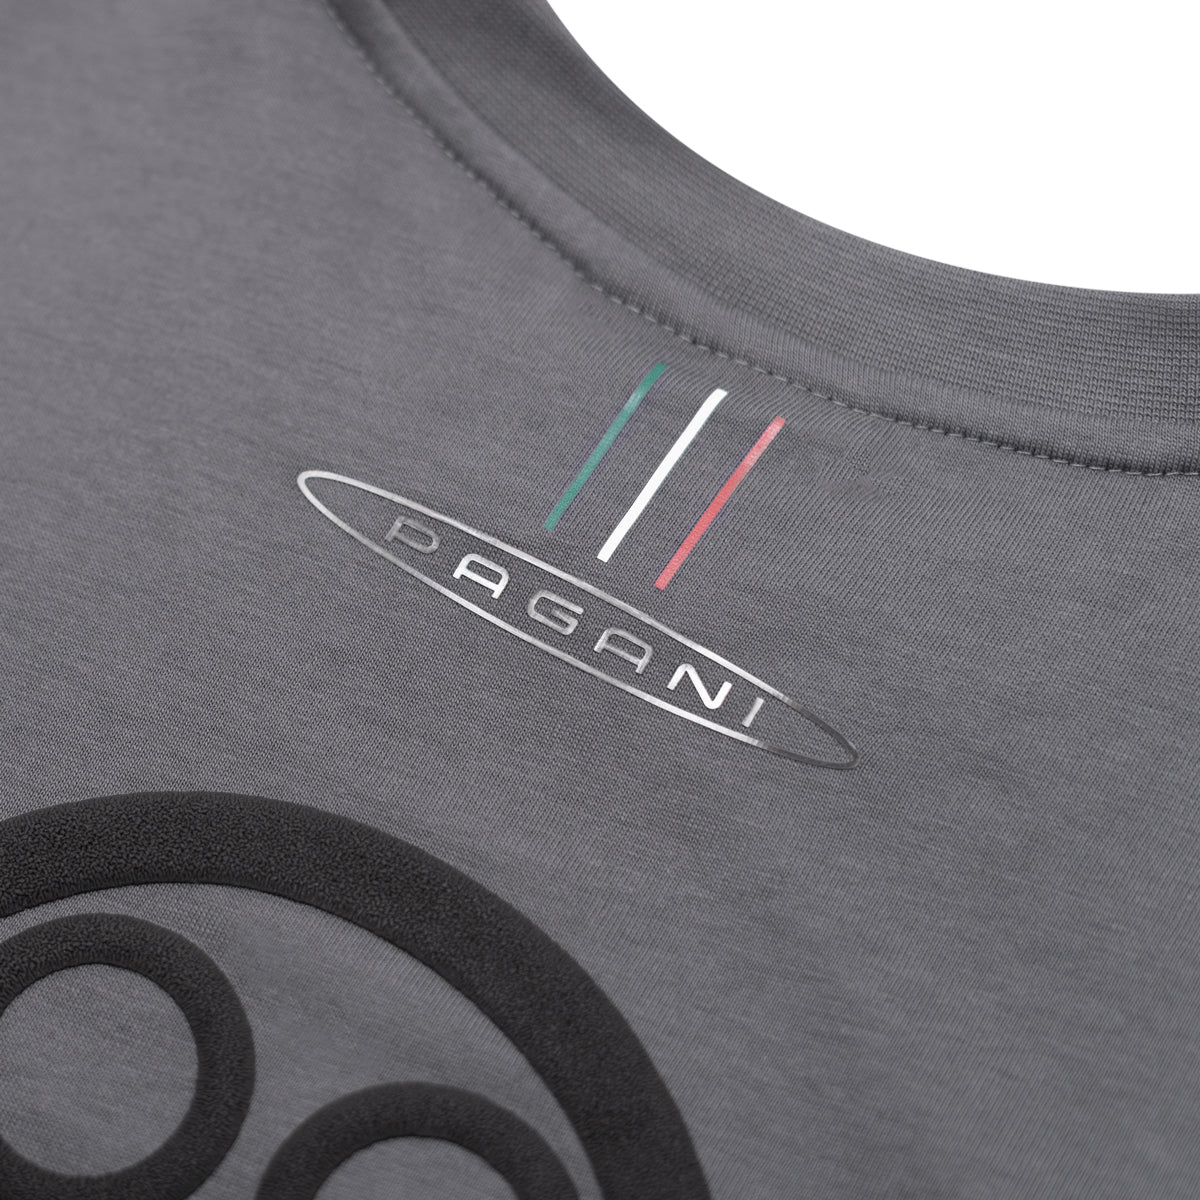 Herren-Basic-T-Shirt Grau | Team Collection